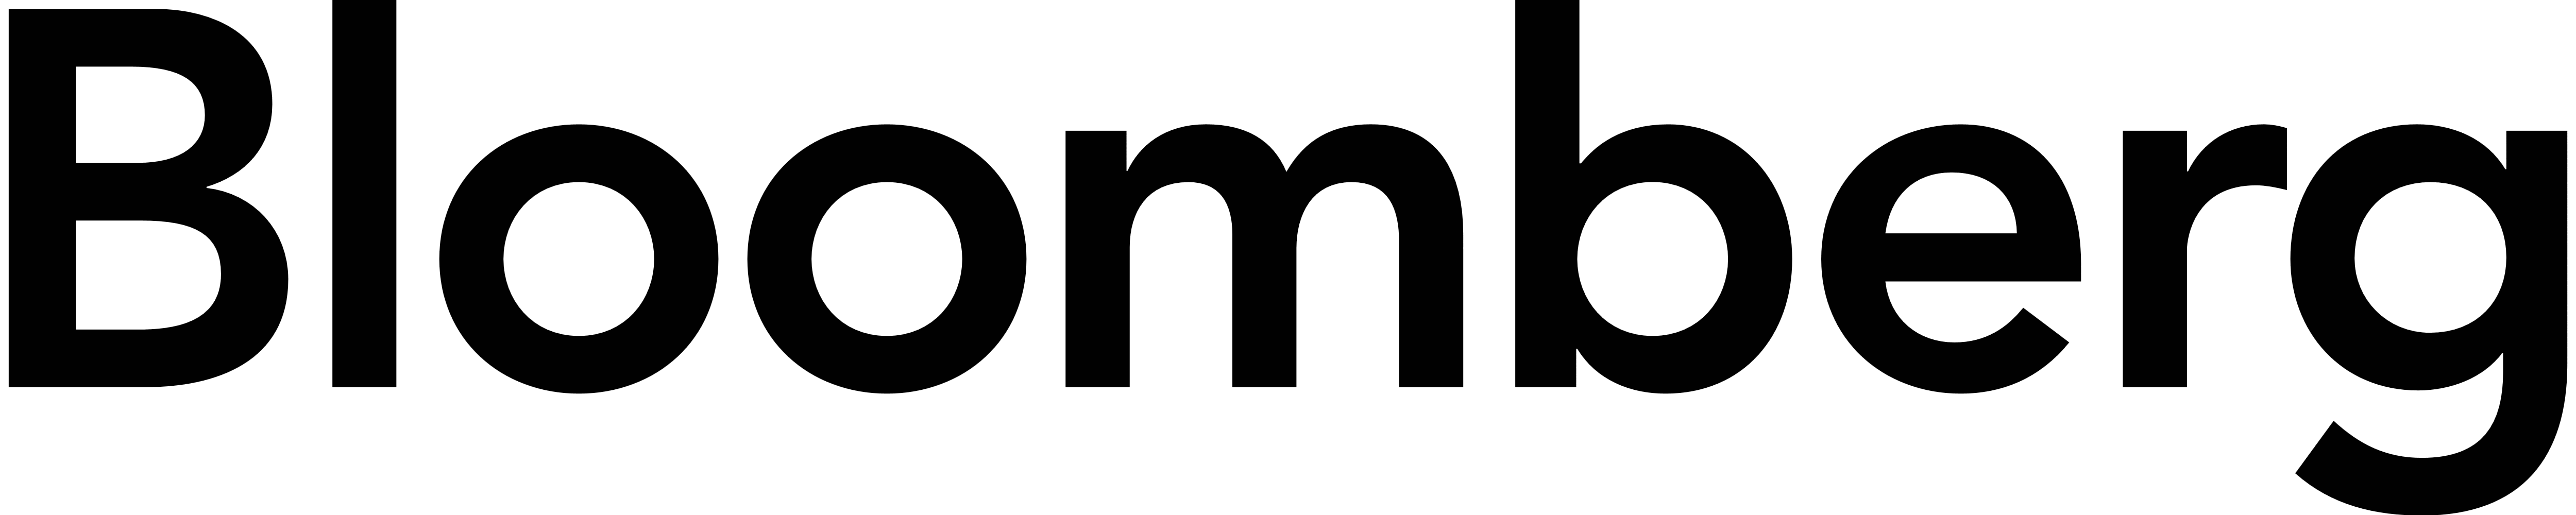 Bloomberg logo - Portal Integration